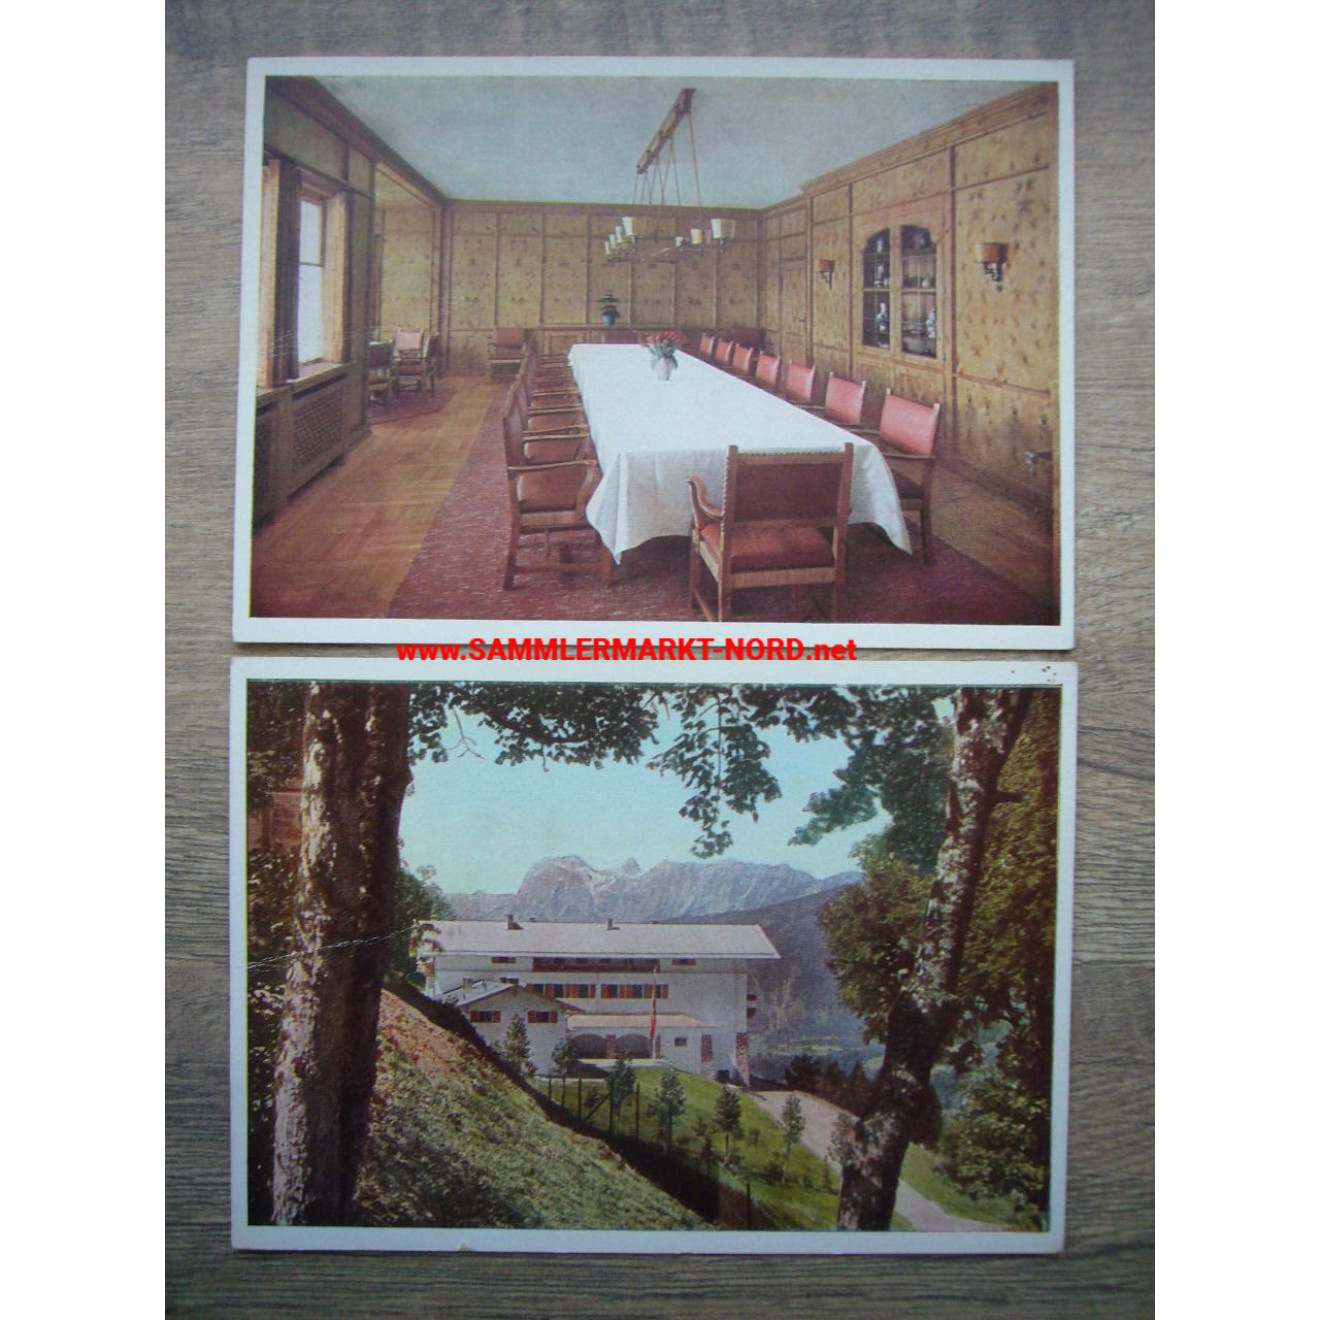 2 x postcard - Obersalzberg - The Berghof